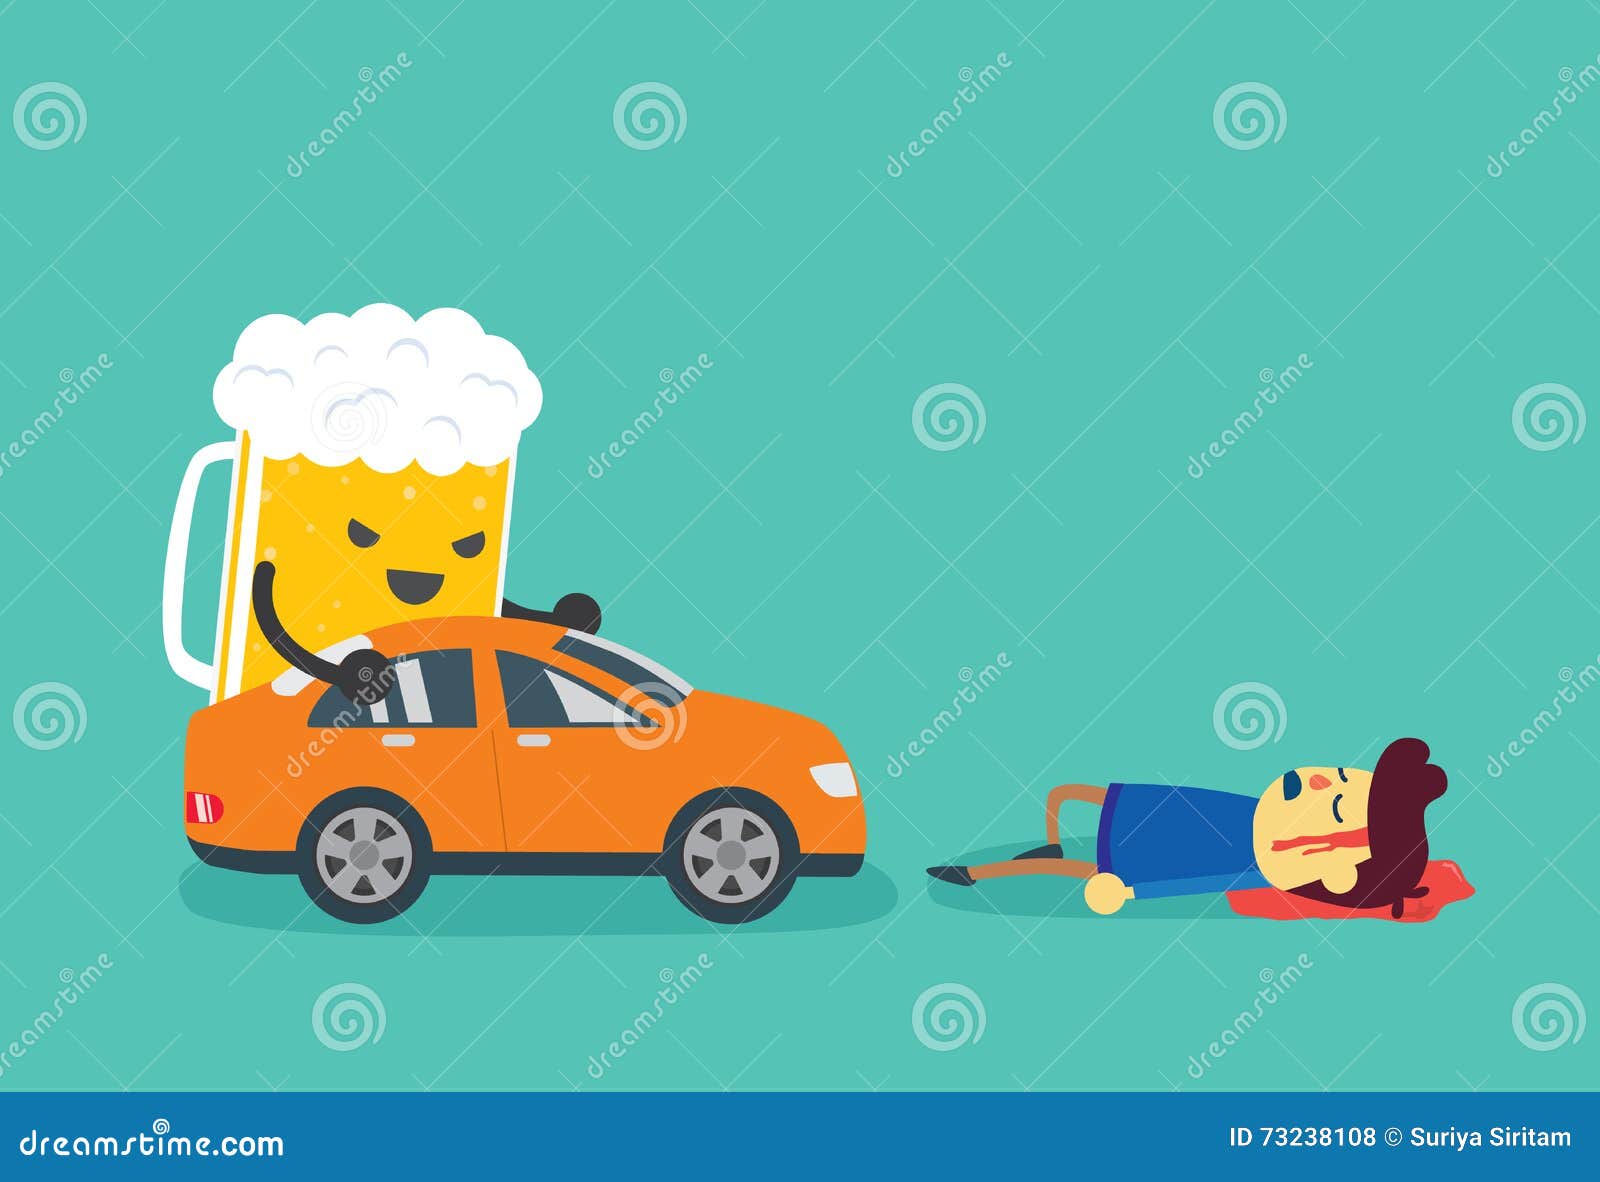 drunk car crash cartoon